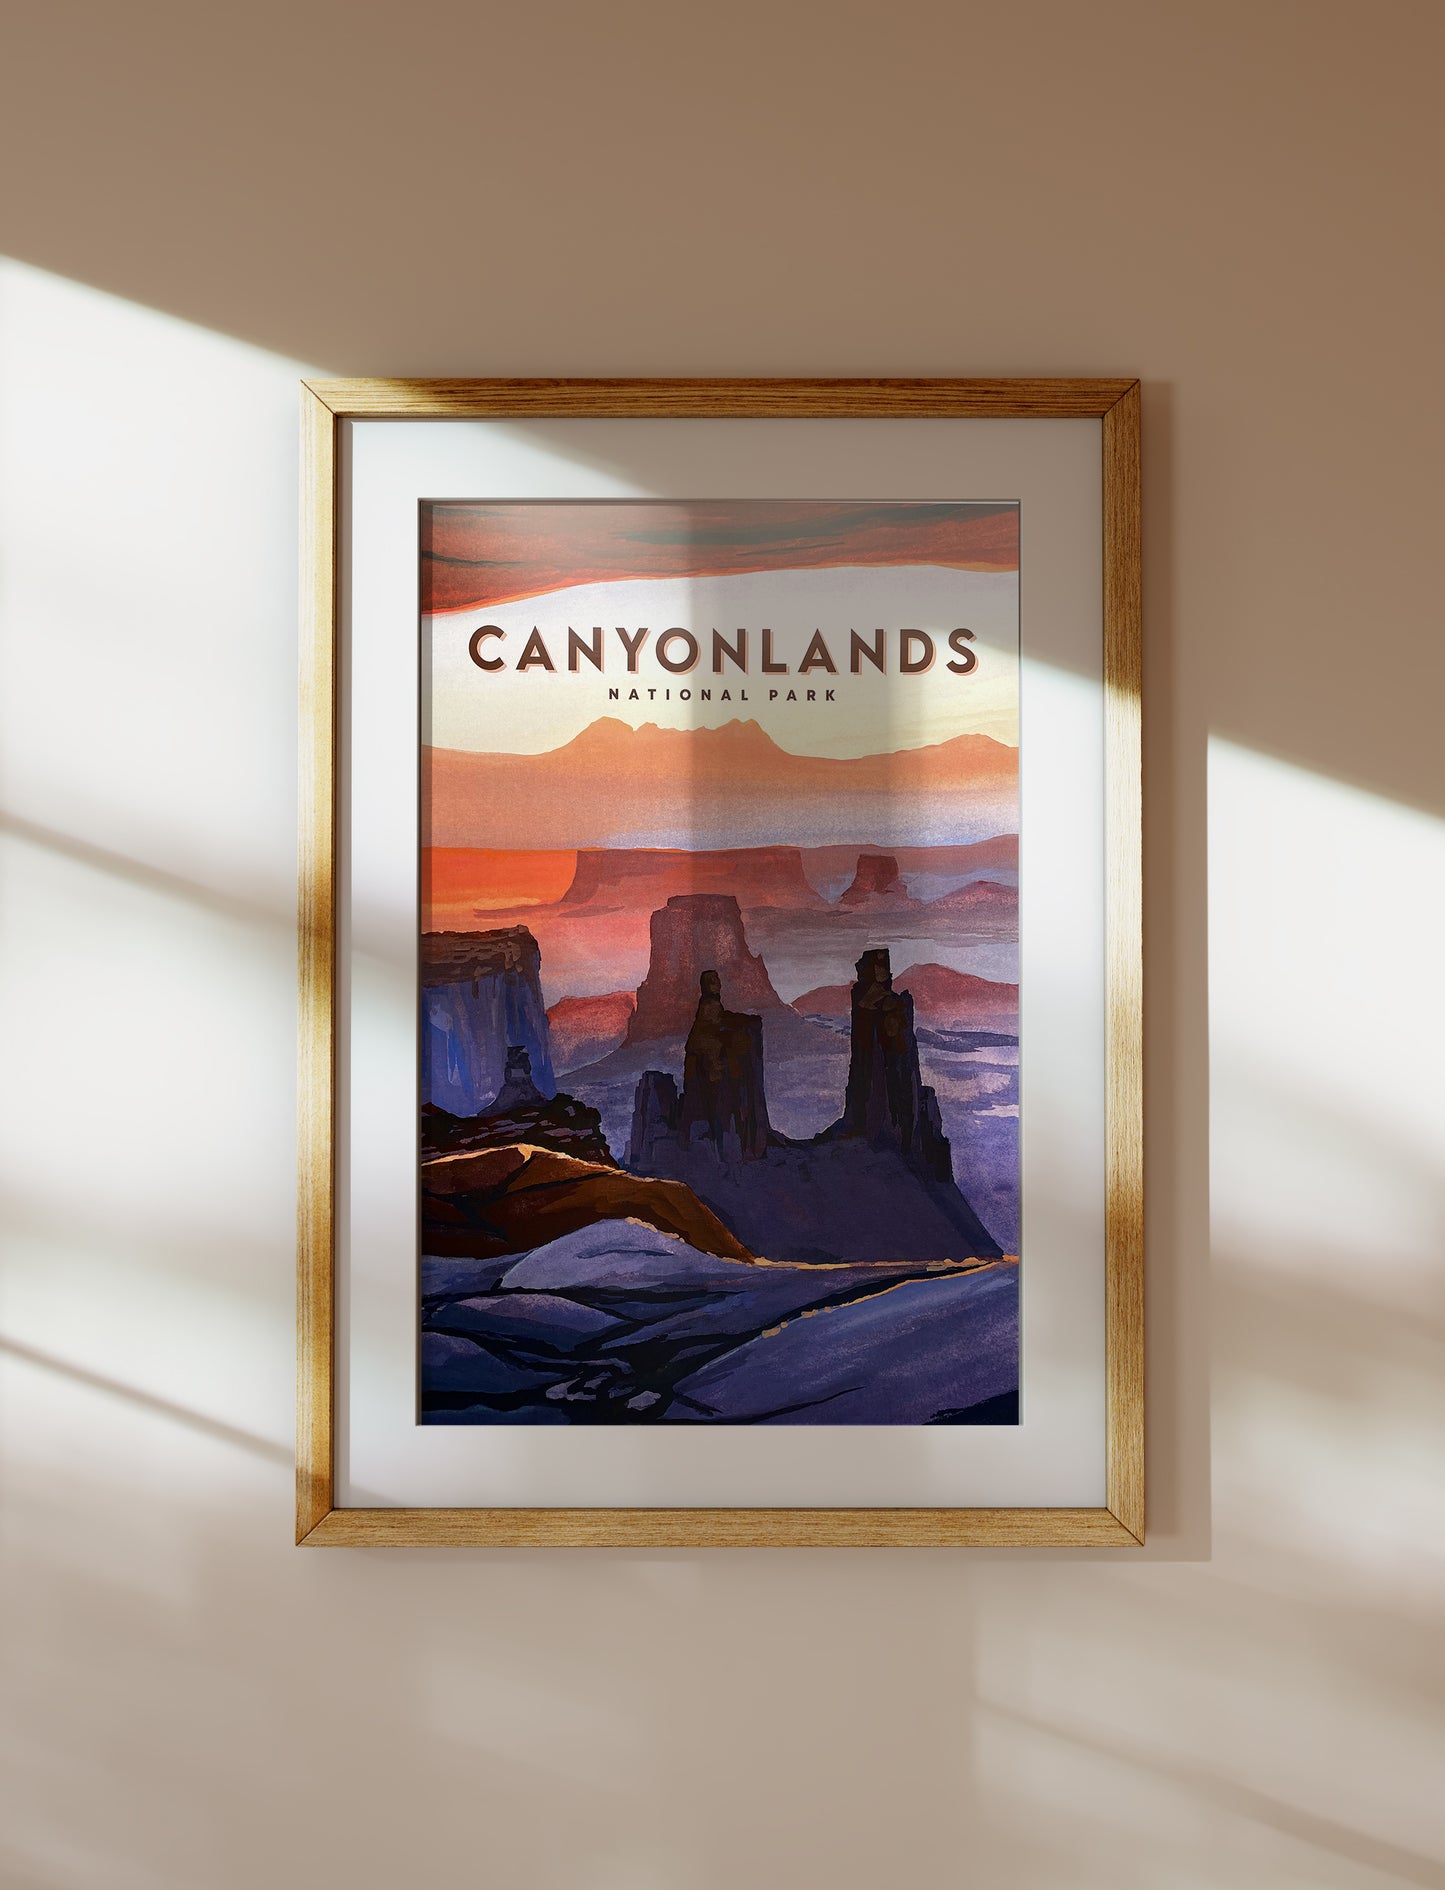 'Canyonlands' National Park Travel Poster